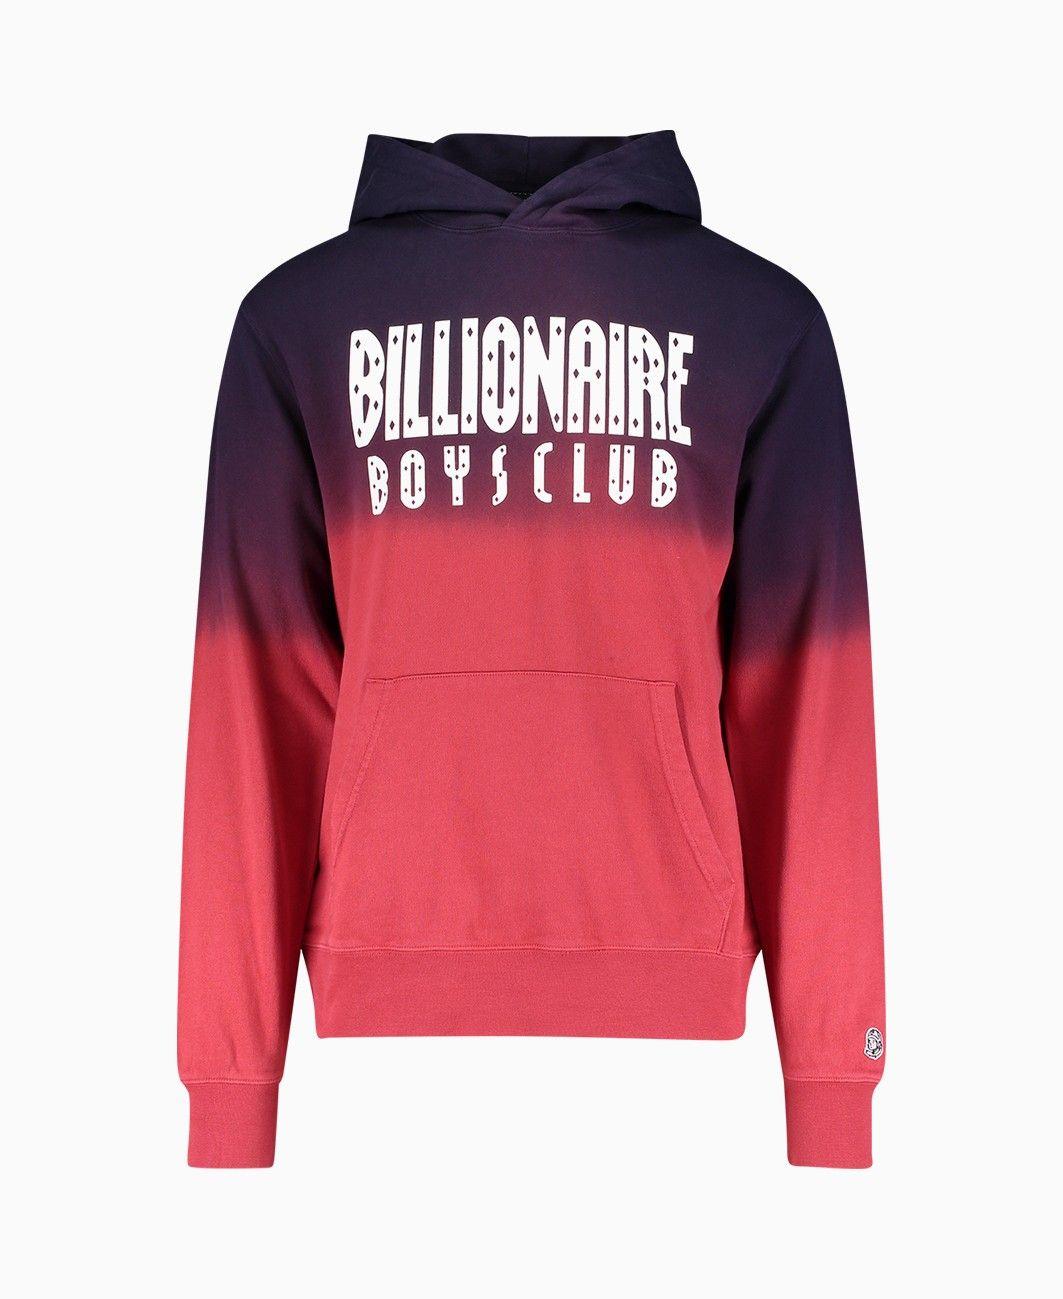 Red Billionaire Boys Club Logo - Billionaire Boys Club - Straight Logo Pullover Hoodie - Red